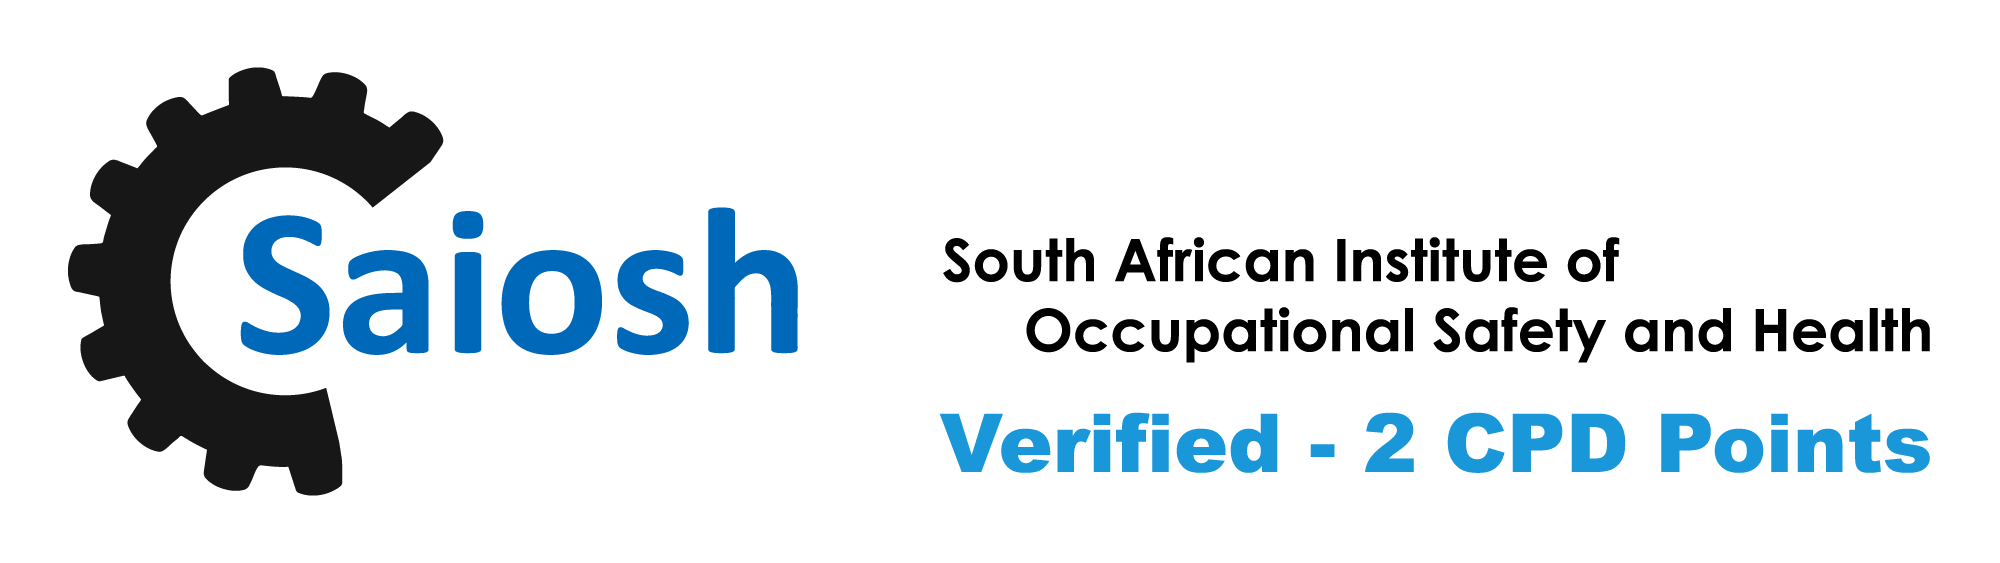 Saiosh_Vector_Logo_Full_All_2021_2CPD_V1